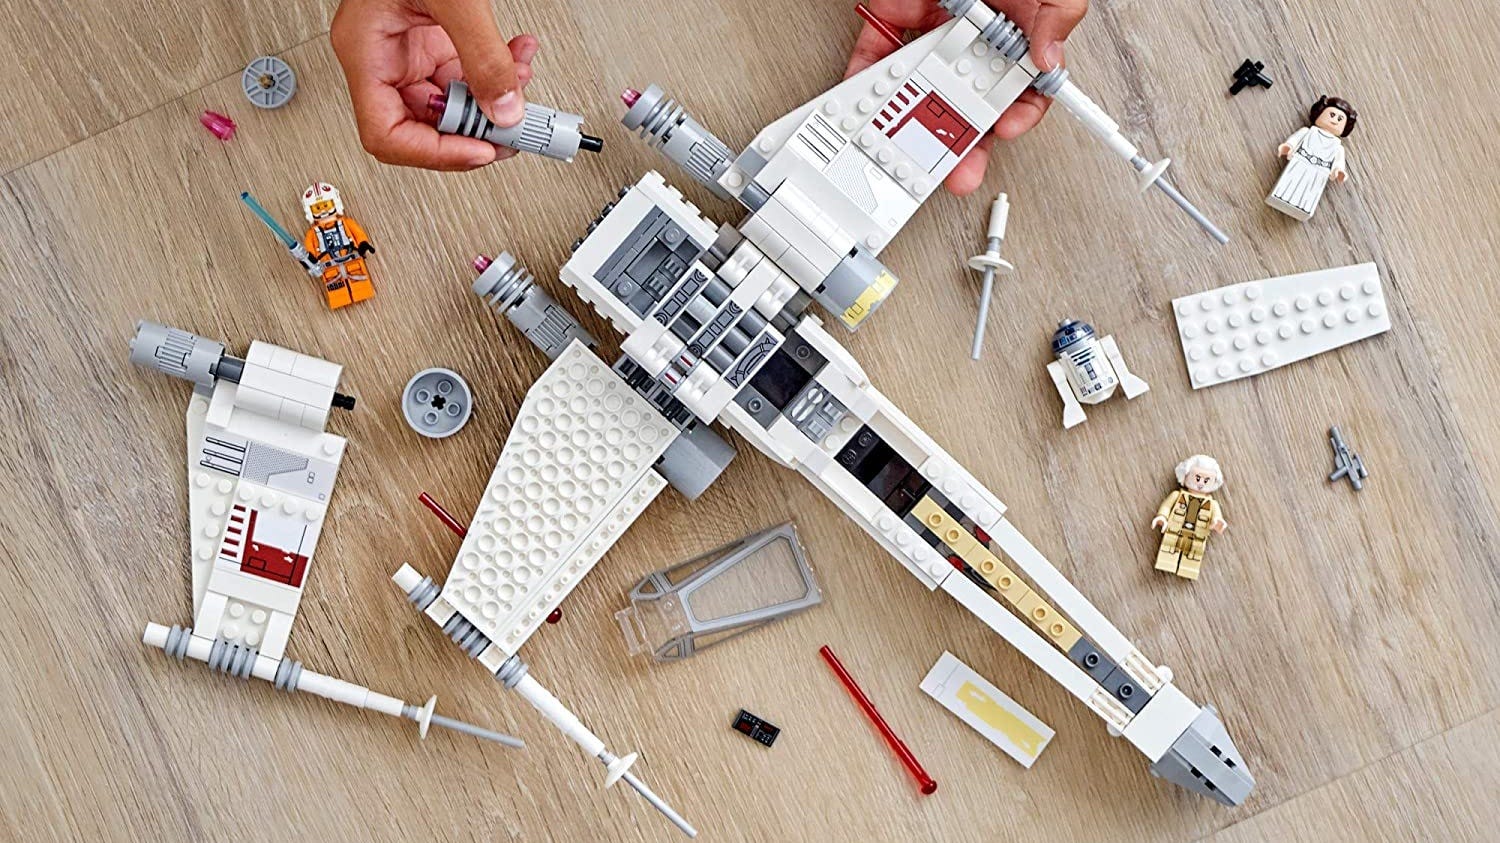 Bestået Bestået Antibiotika 14 popular Lego Stars Wars gifts 2021: Building kits, Baby Yoda and more